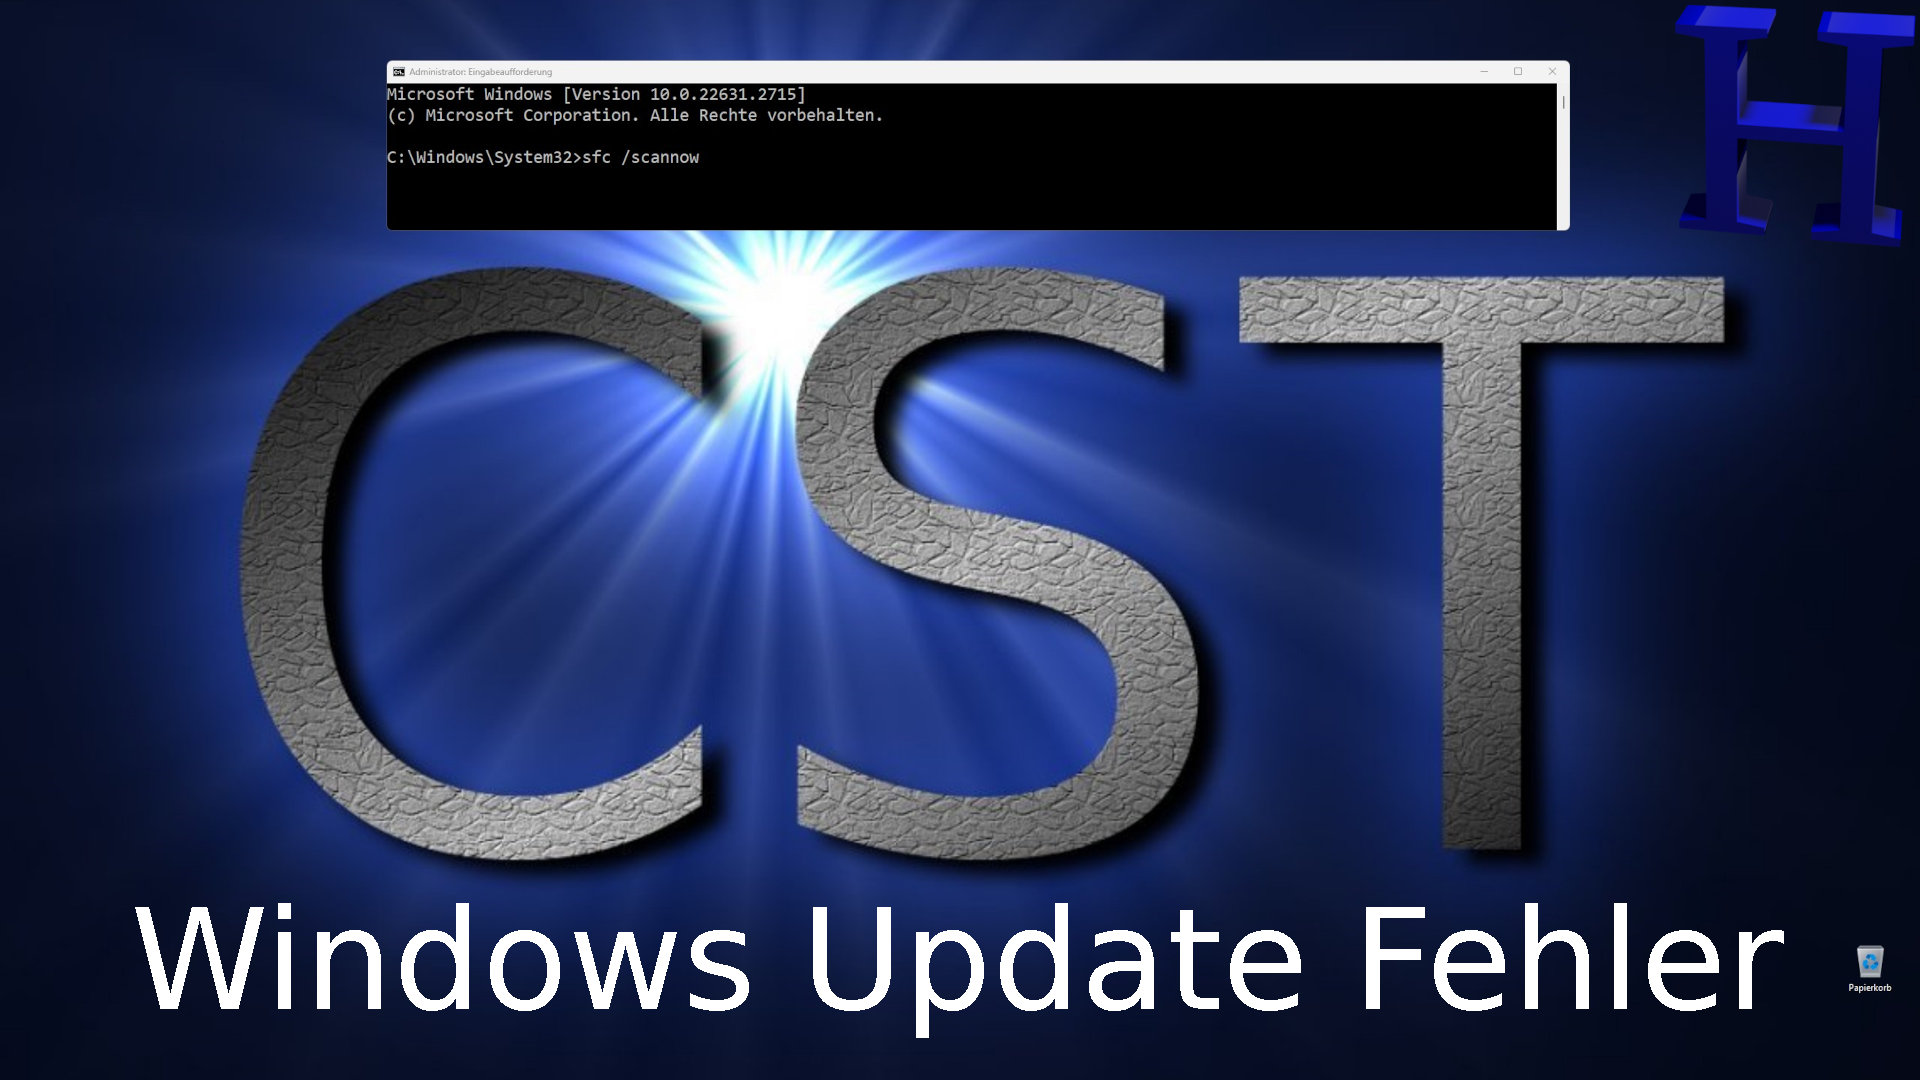 Windows Update Fehler beheben